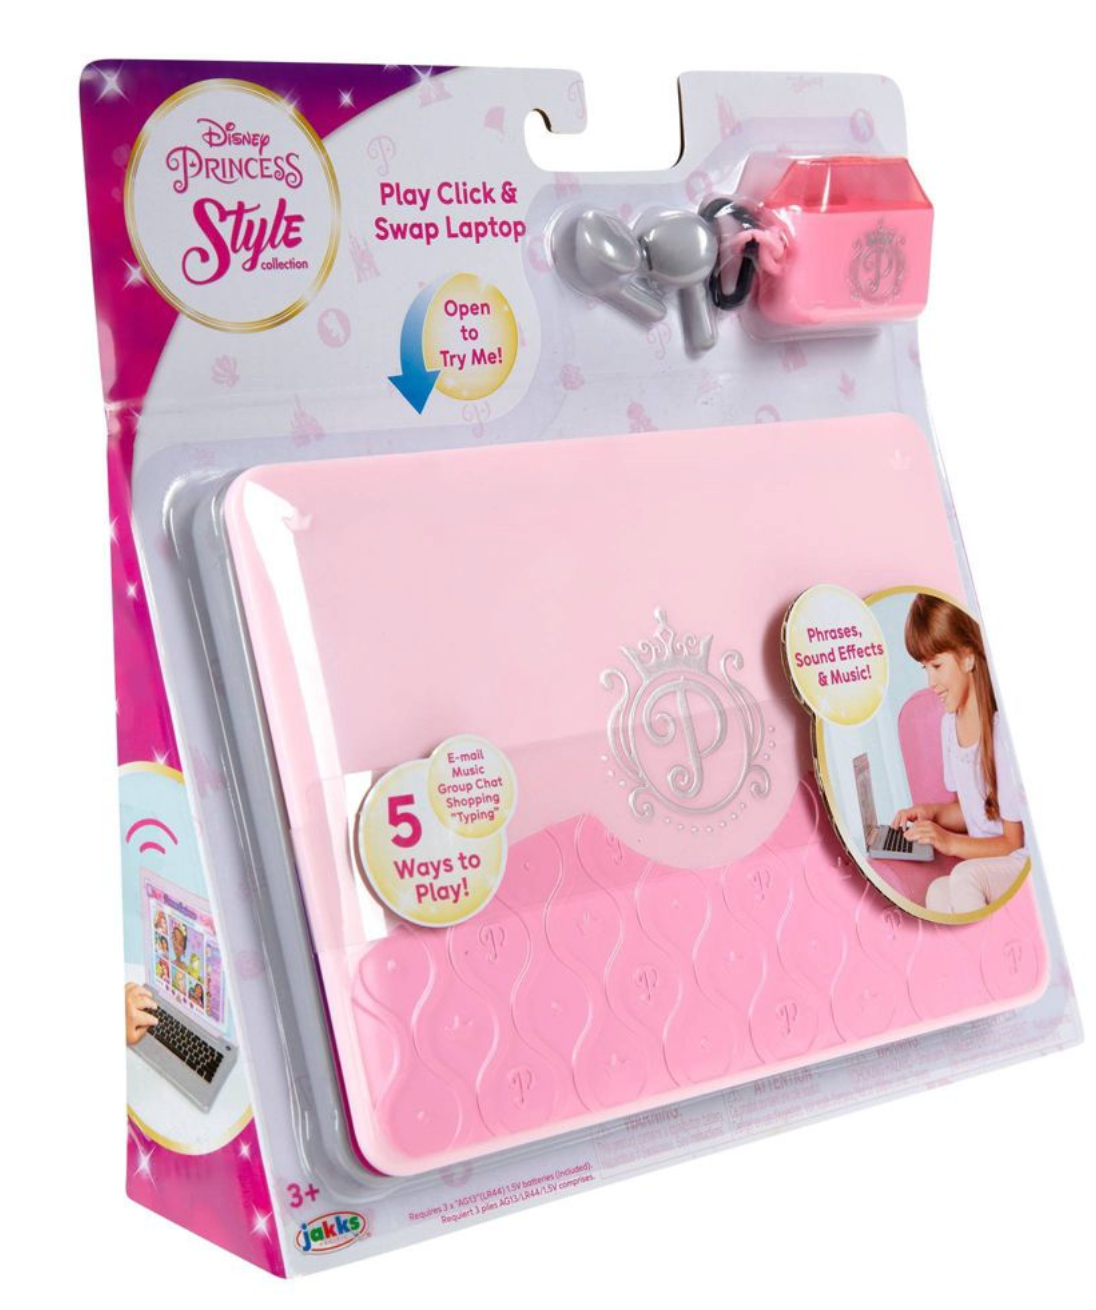 Disney Princess Play Click & Swap Laptop Toy New with Box